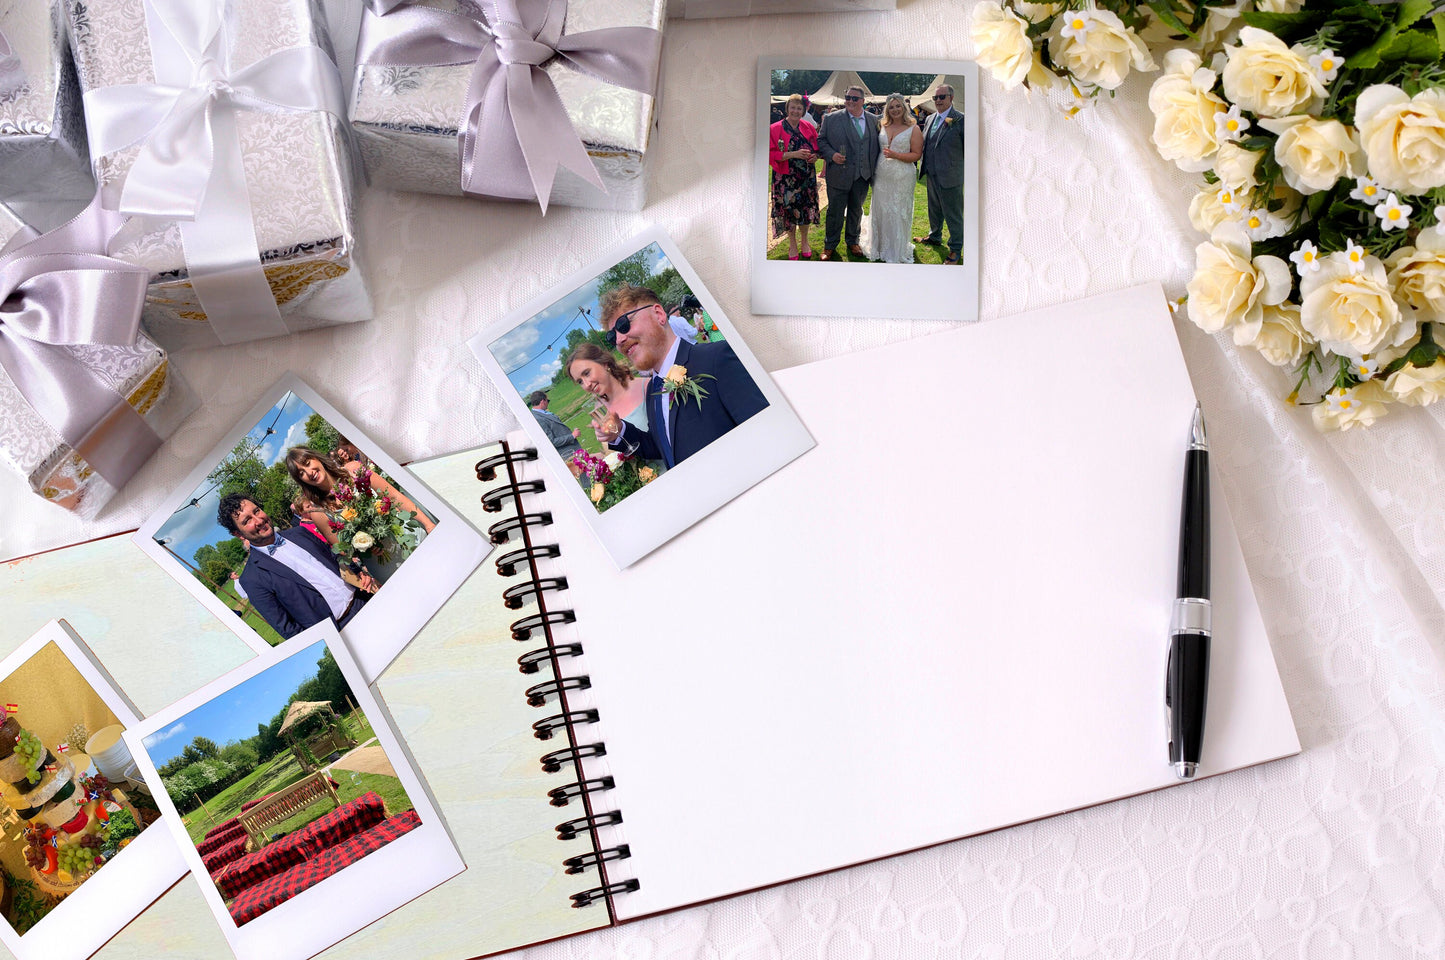 Personalised Engraved Wooden Wedding Guest Book with Bold Names, Wedding Photo Book, Wedding Photo Album, Wedding Gift, - Resplendent Aurora